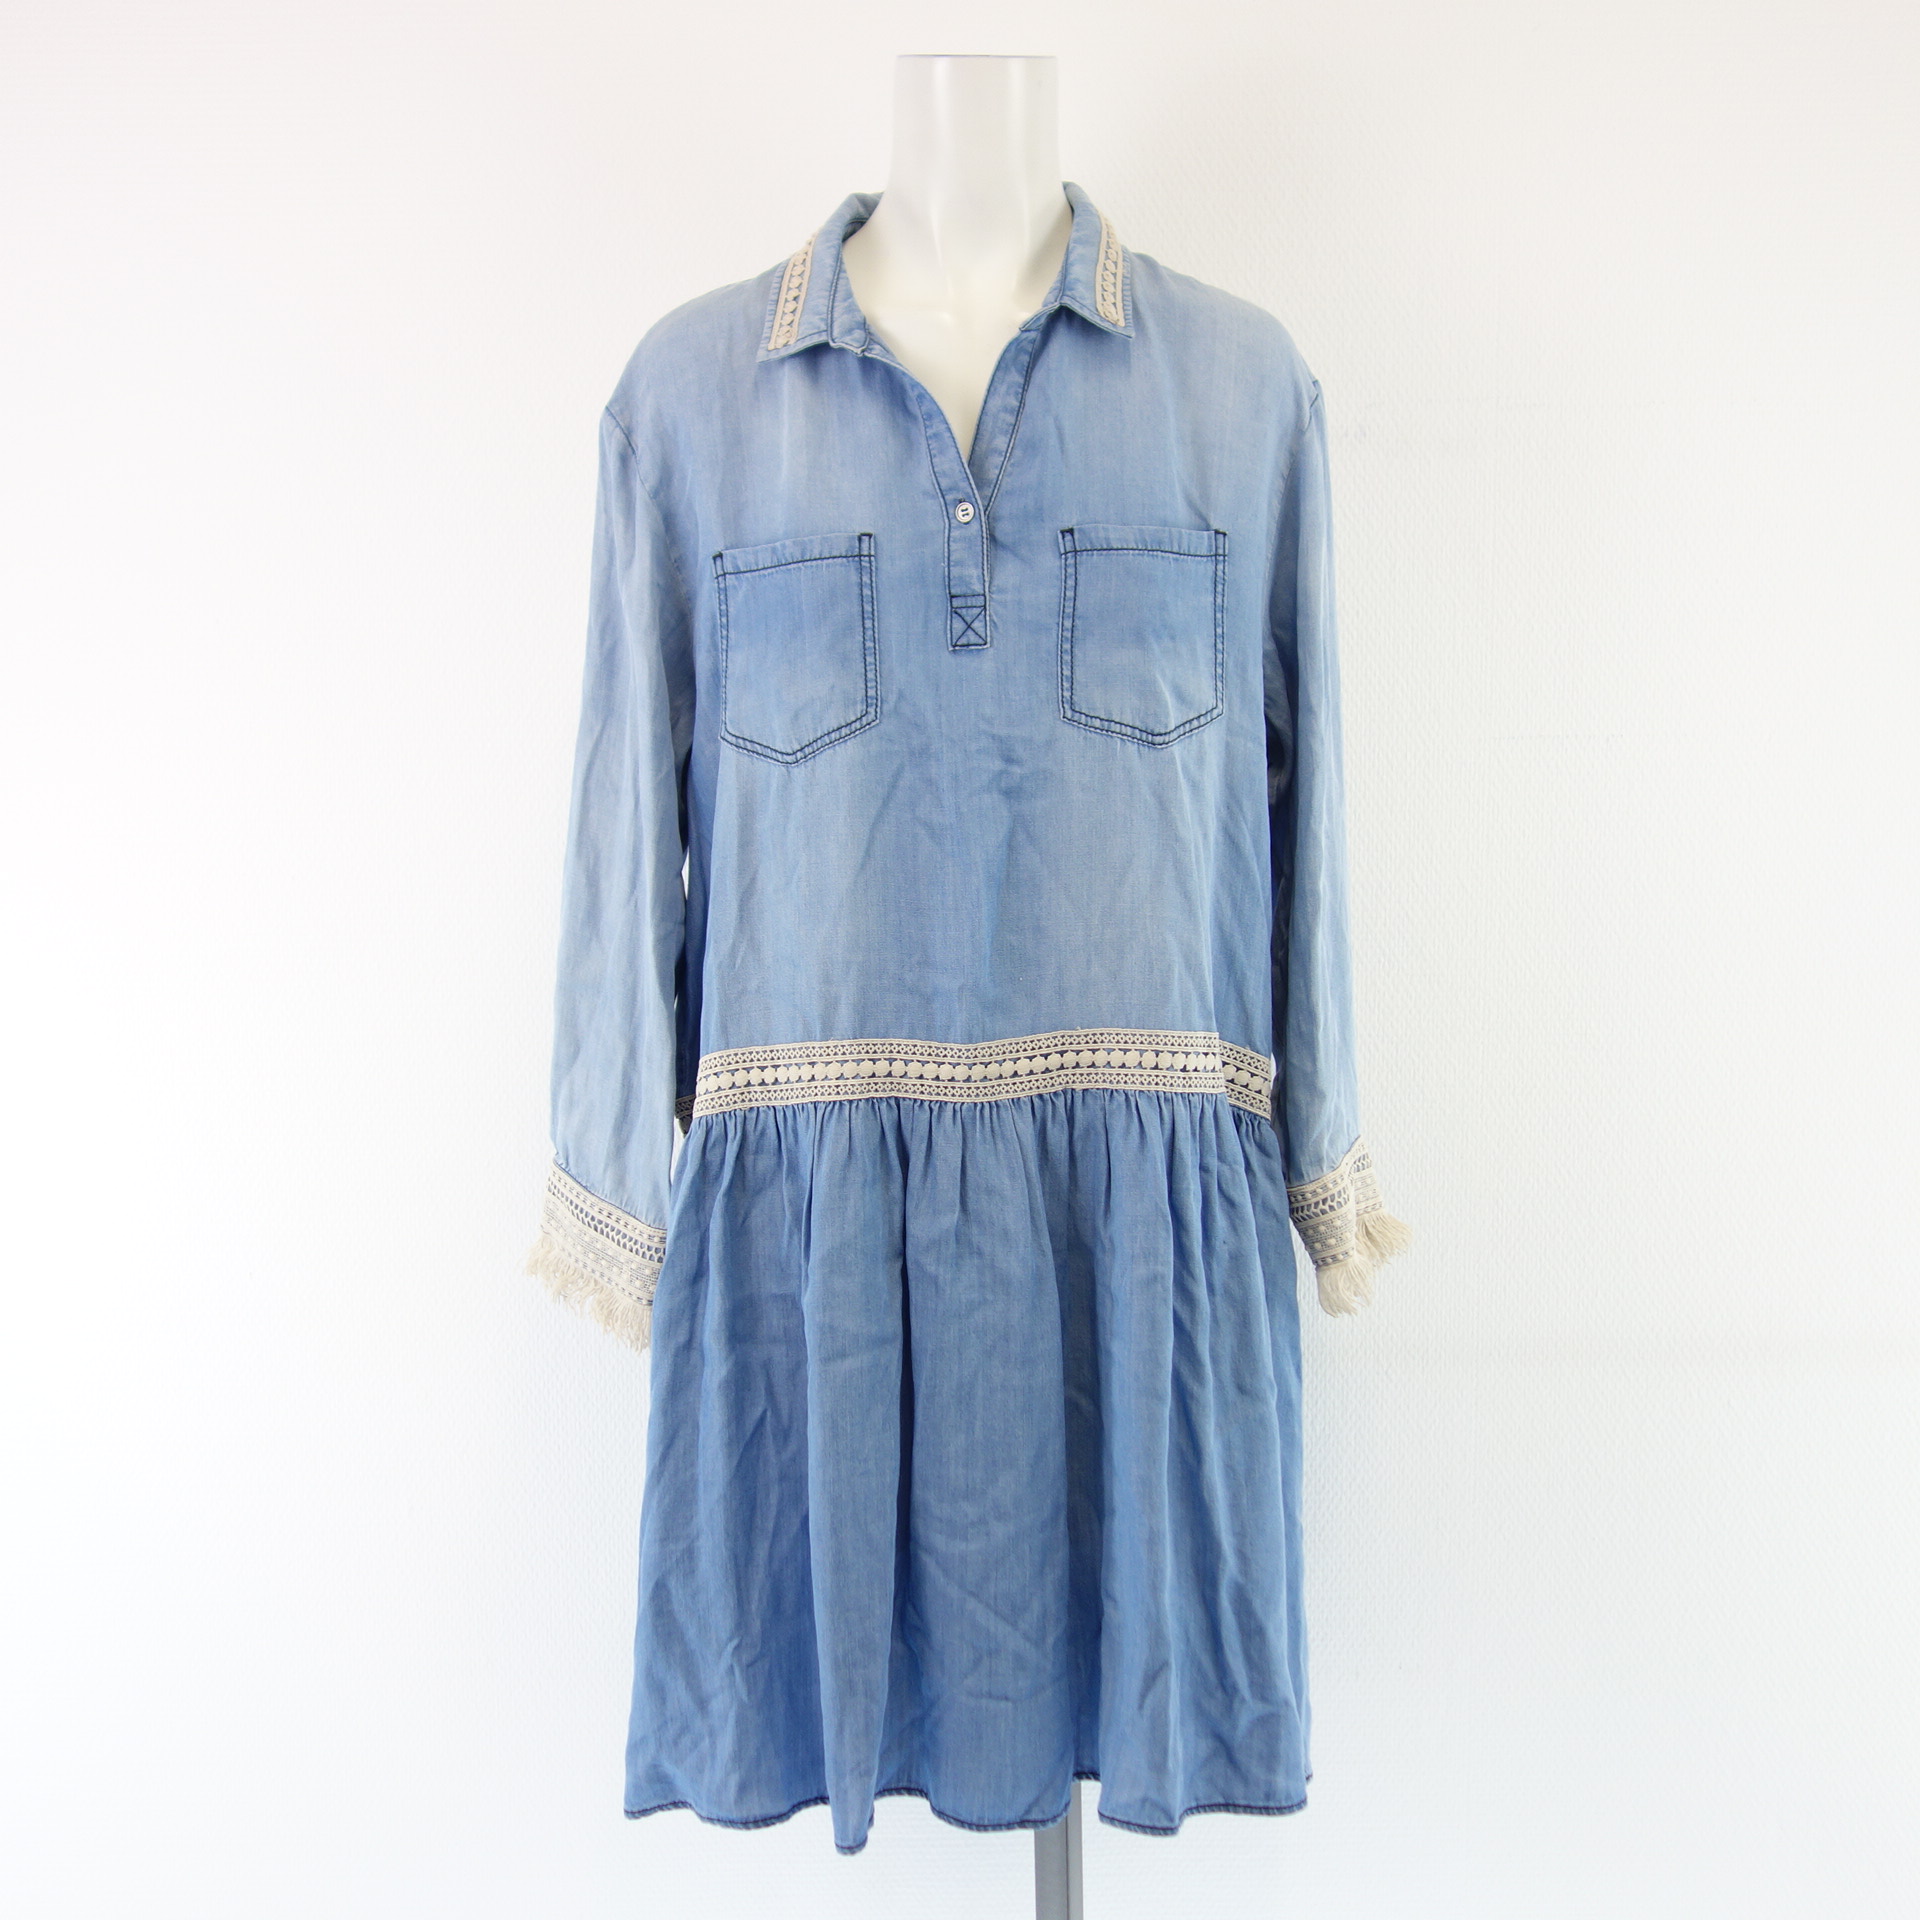 CATNOIR Damen Jeans Kleid Jeanskleid Tunika Blau 100% Lyocell Gr 42 Boho